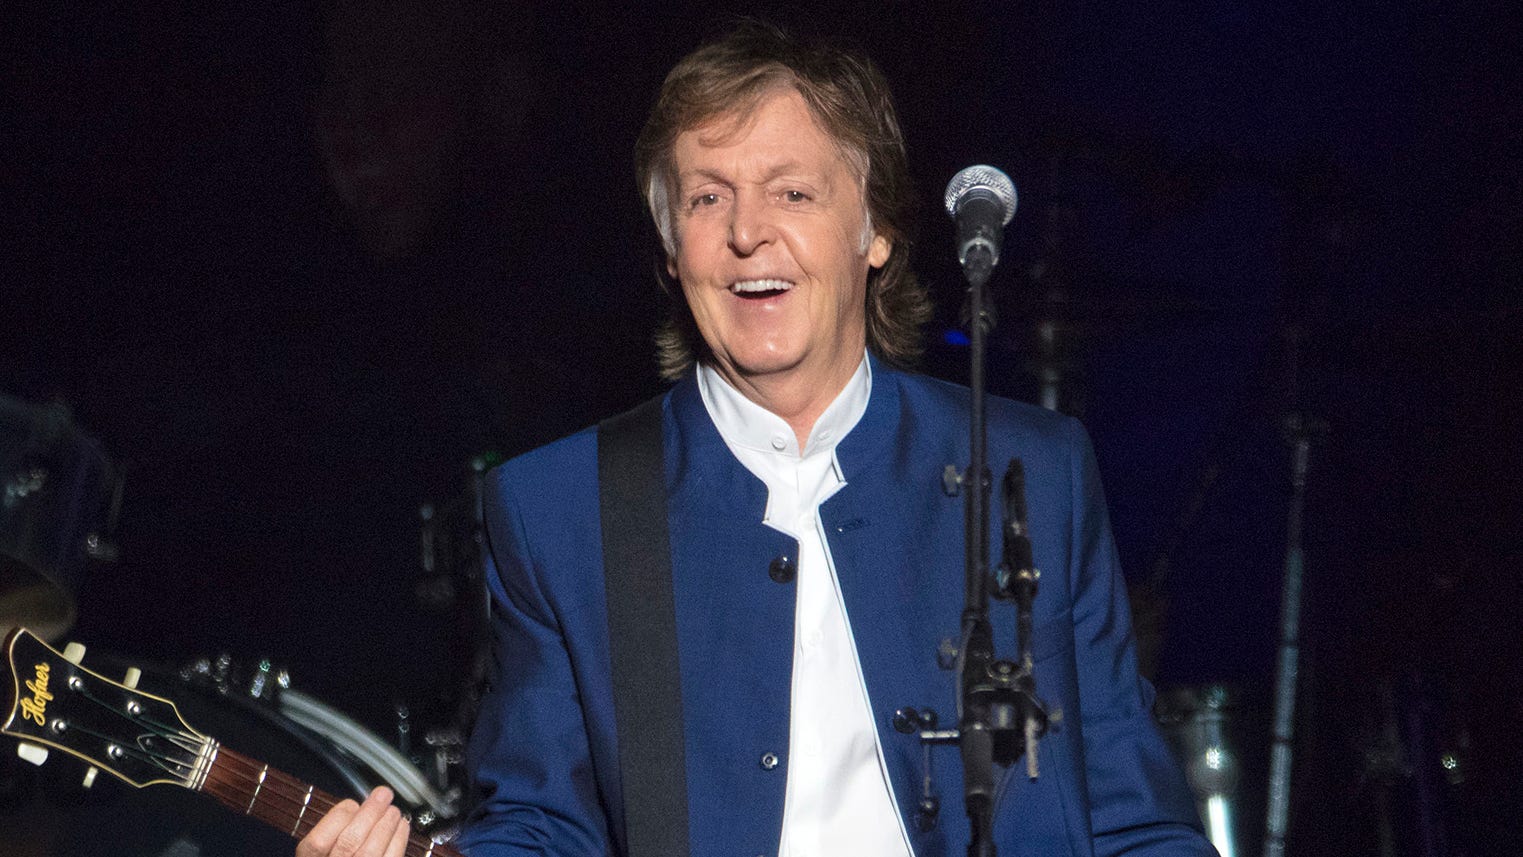 Paul McCartney 2022 tour starts April 28, hits NYC, LA, Oakland